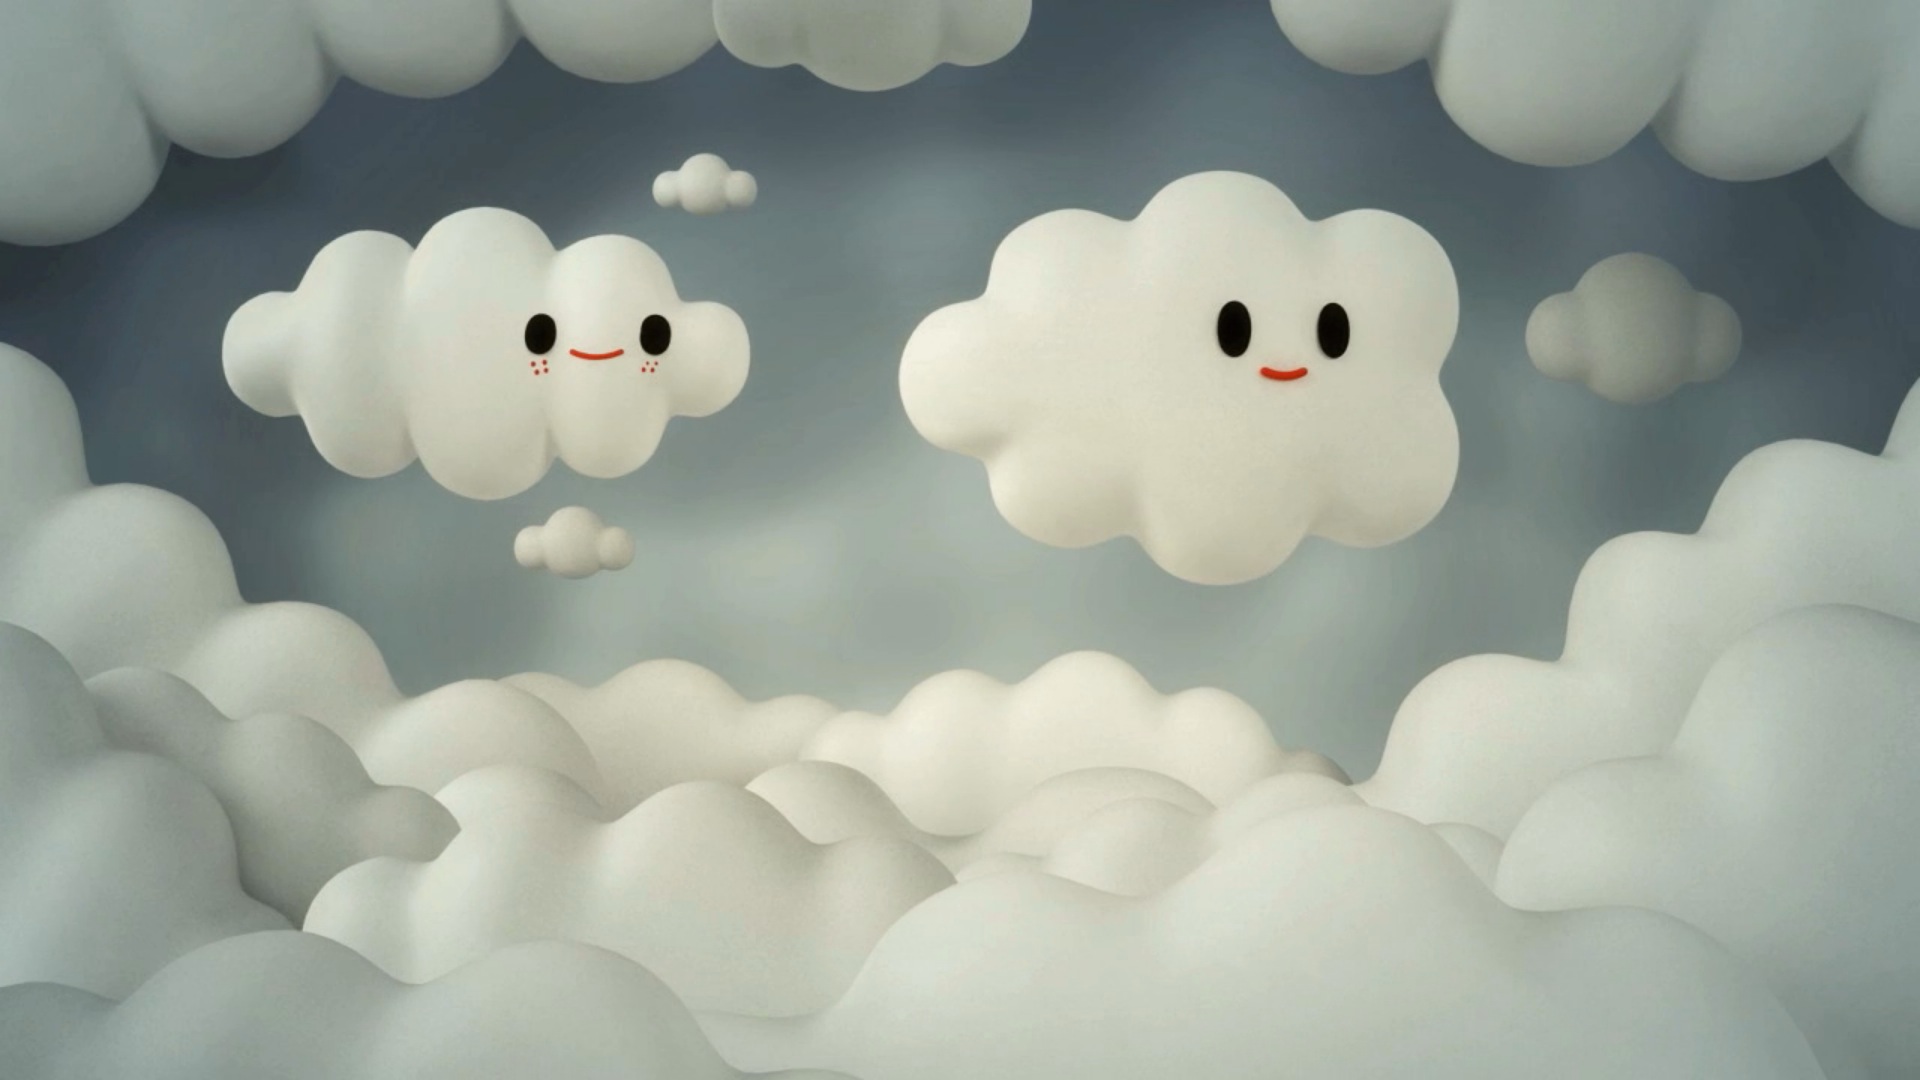 Cloudy Film5